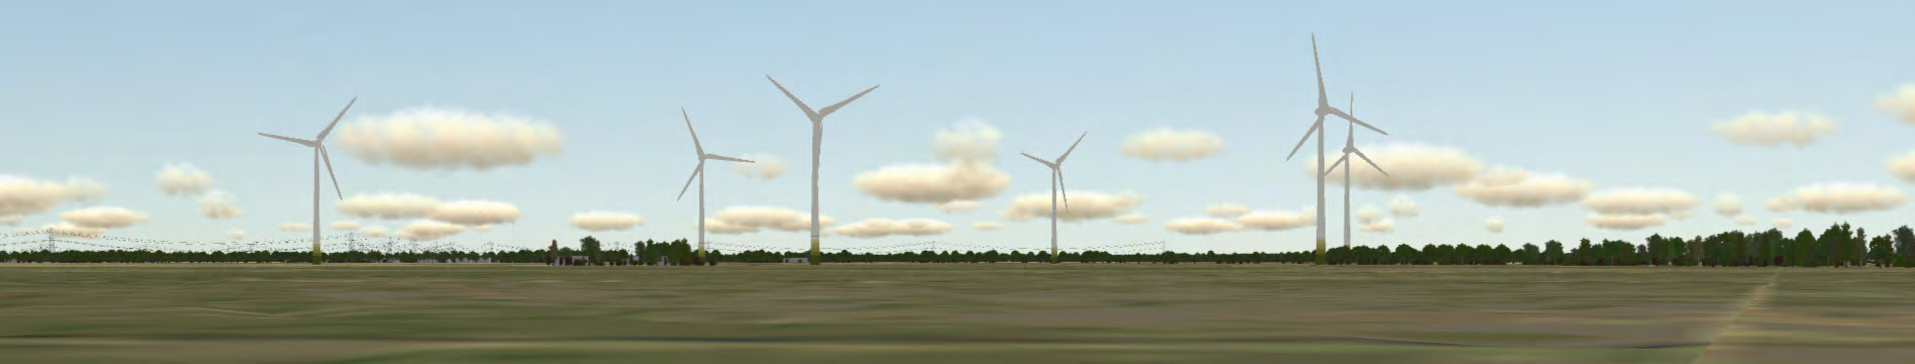 Windenergie Drenthe 45 Vogelvlucht opstelling 1 - Zicht vanuit N34